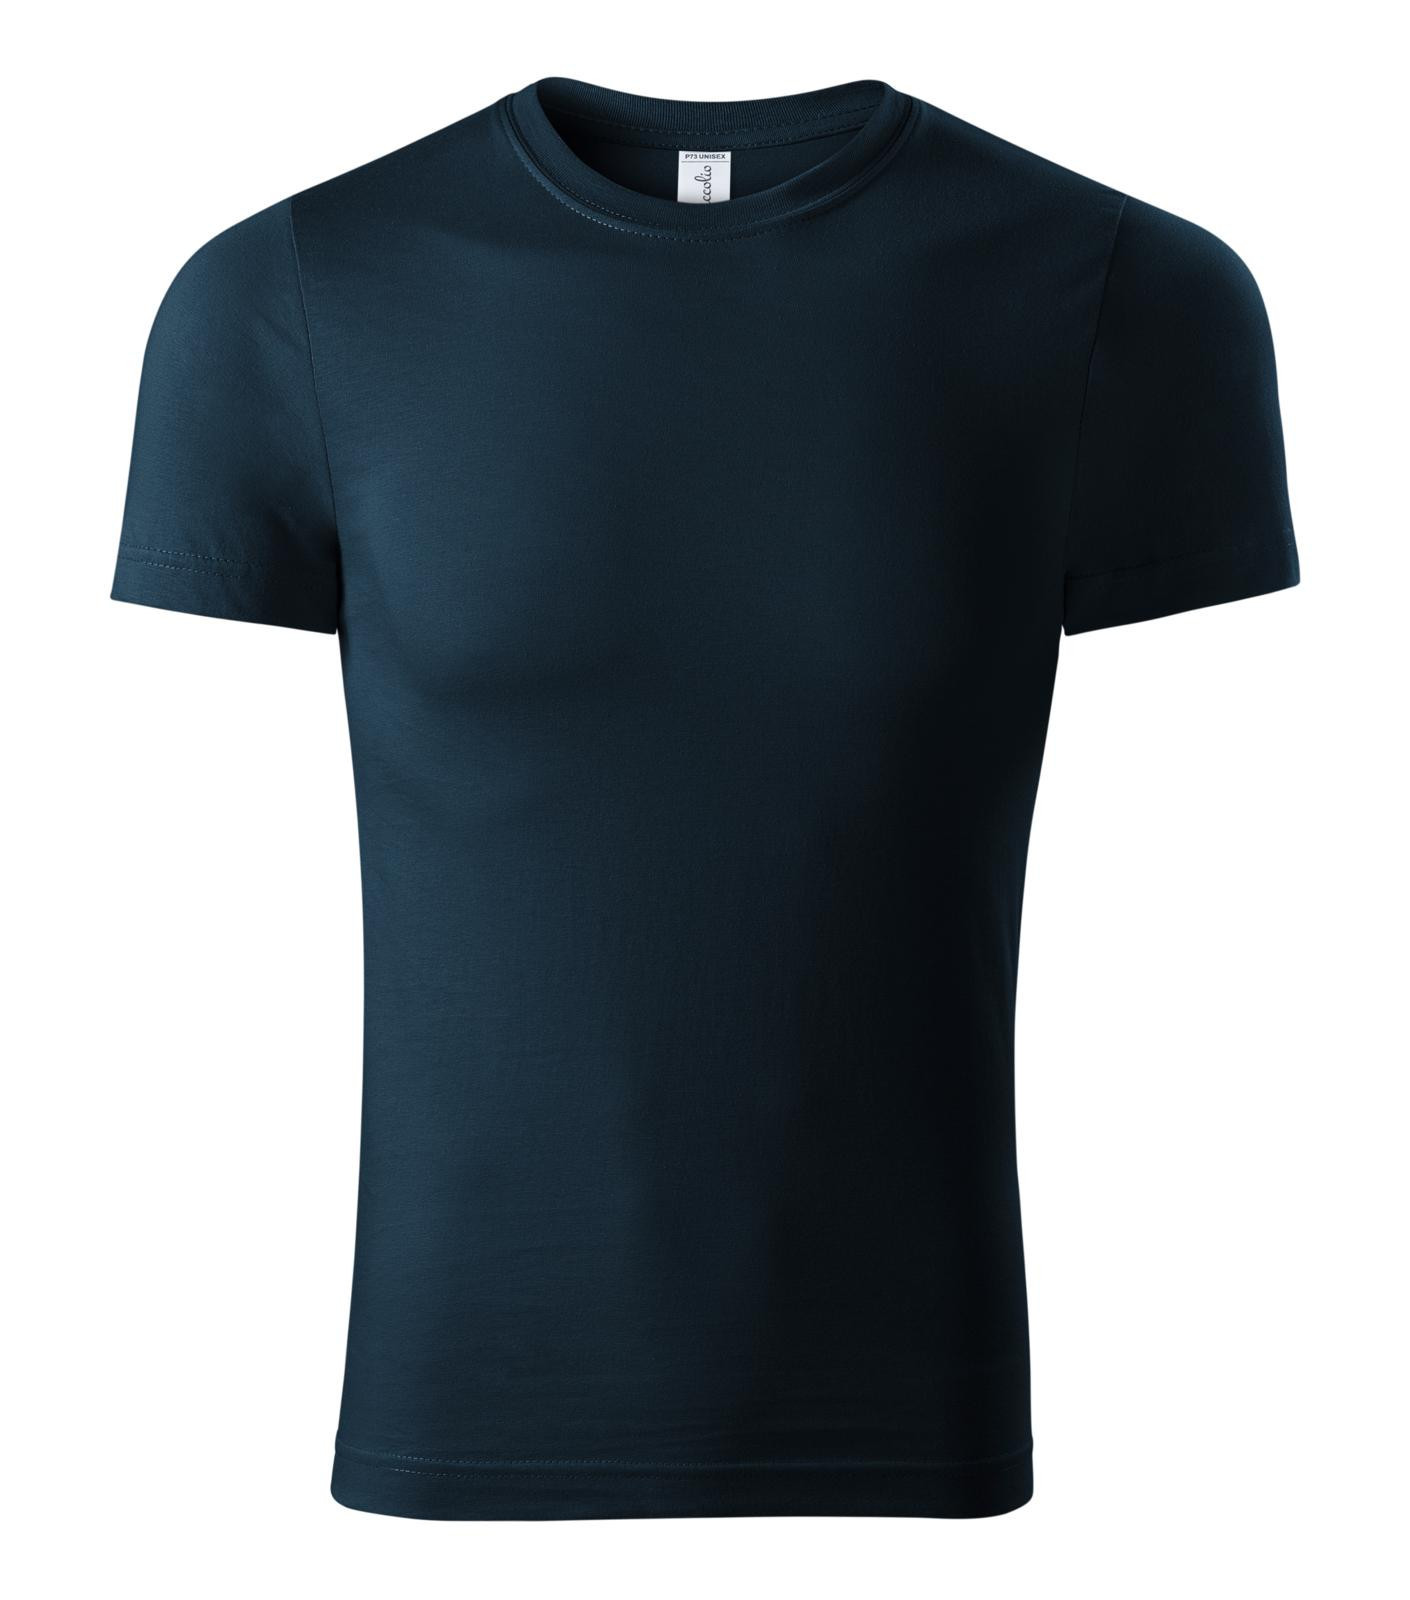 Unisex tričko Piccolio Paint P73 - veľkosť: 3XL, farba: tmavo modrá